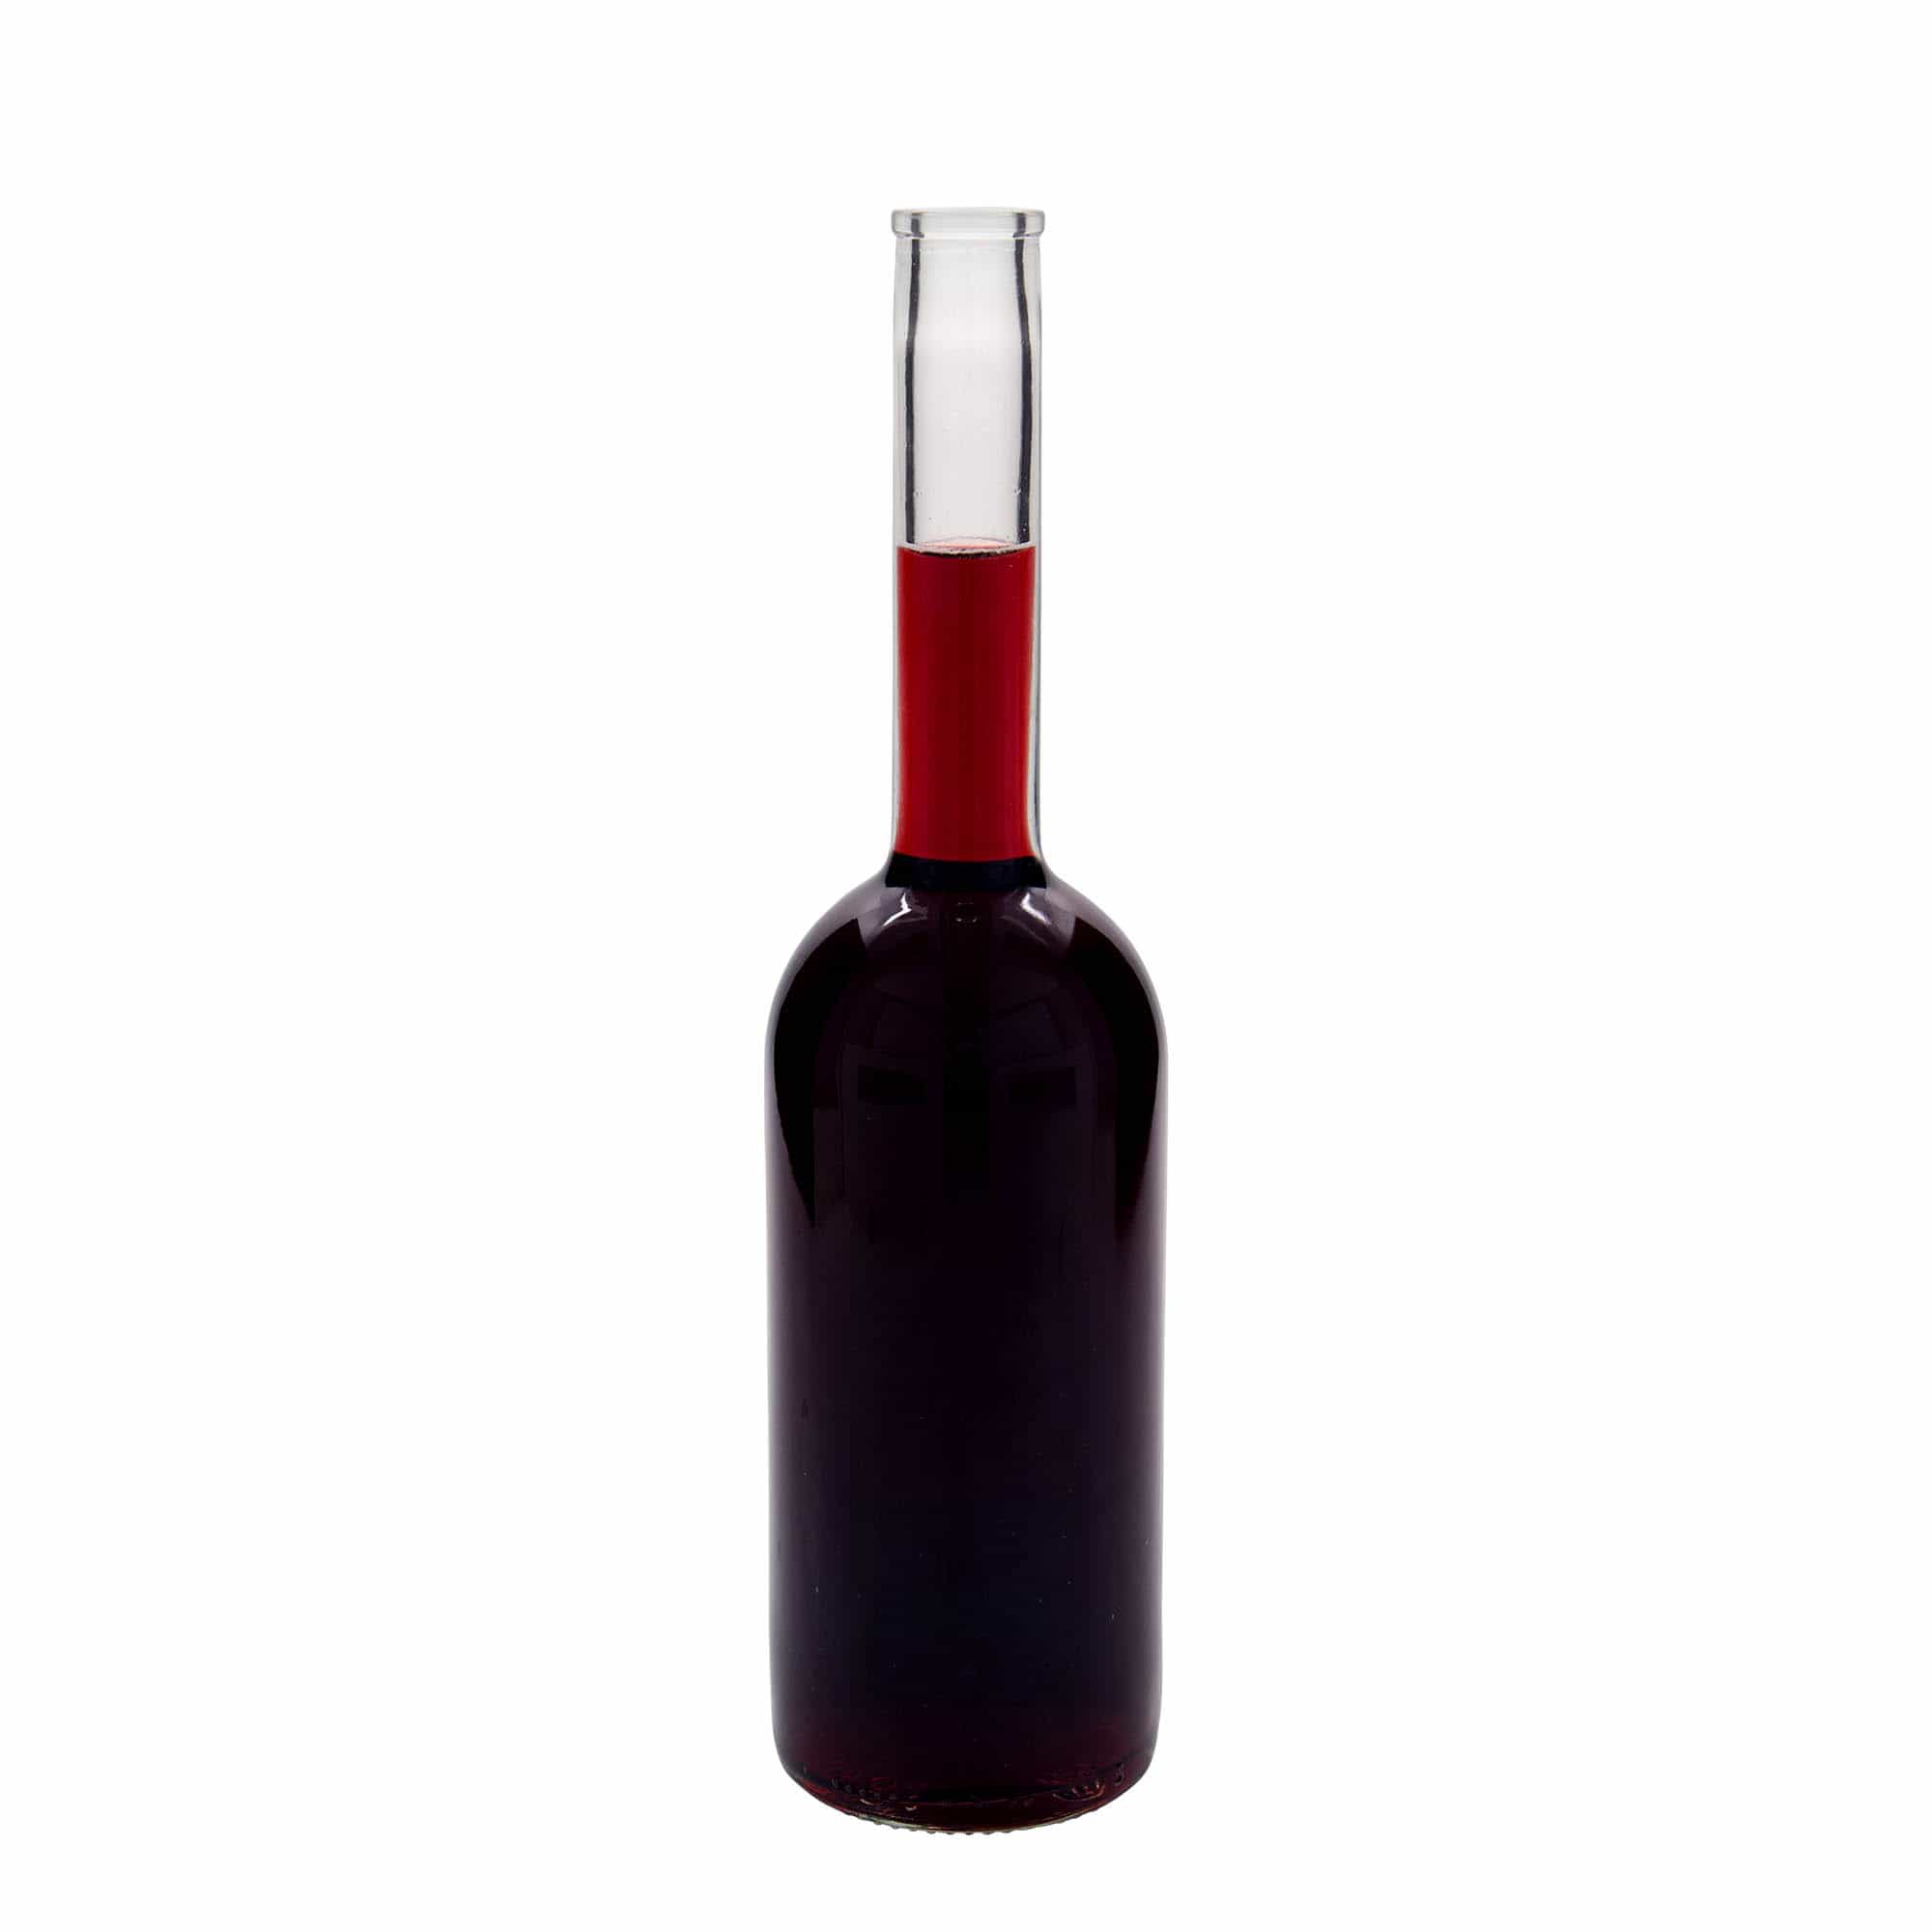 700 ml glass bottle 'Opera', closure: cork